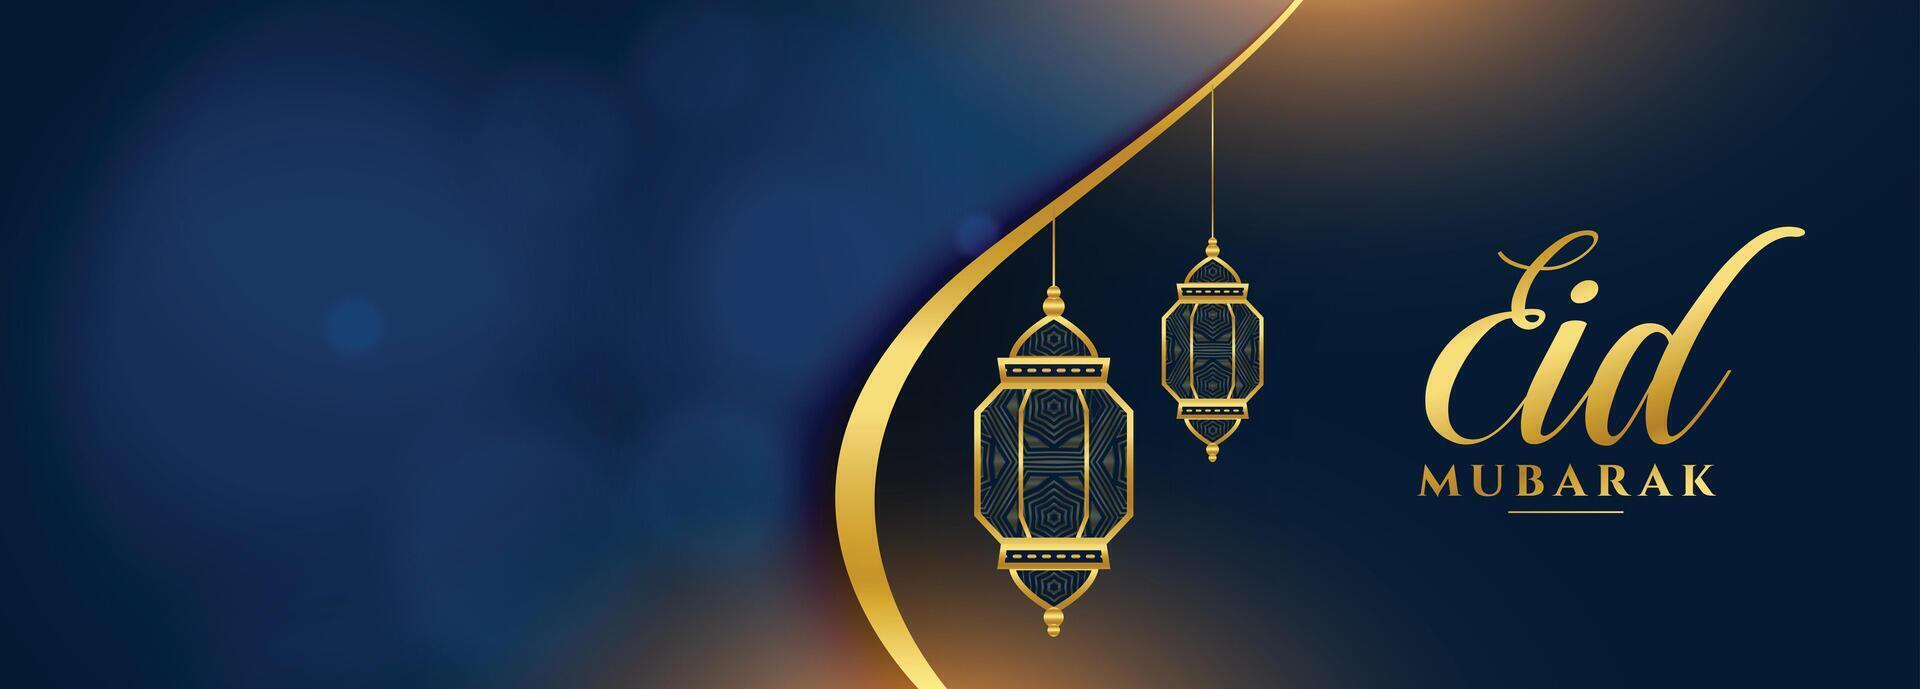 eid mubarak shiny golden banner with text space vector